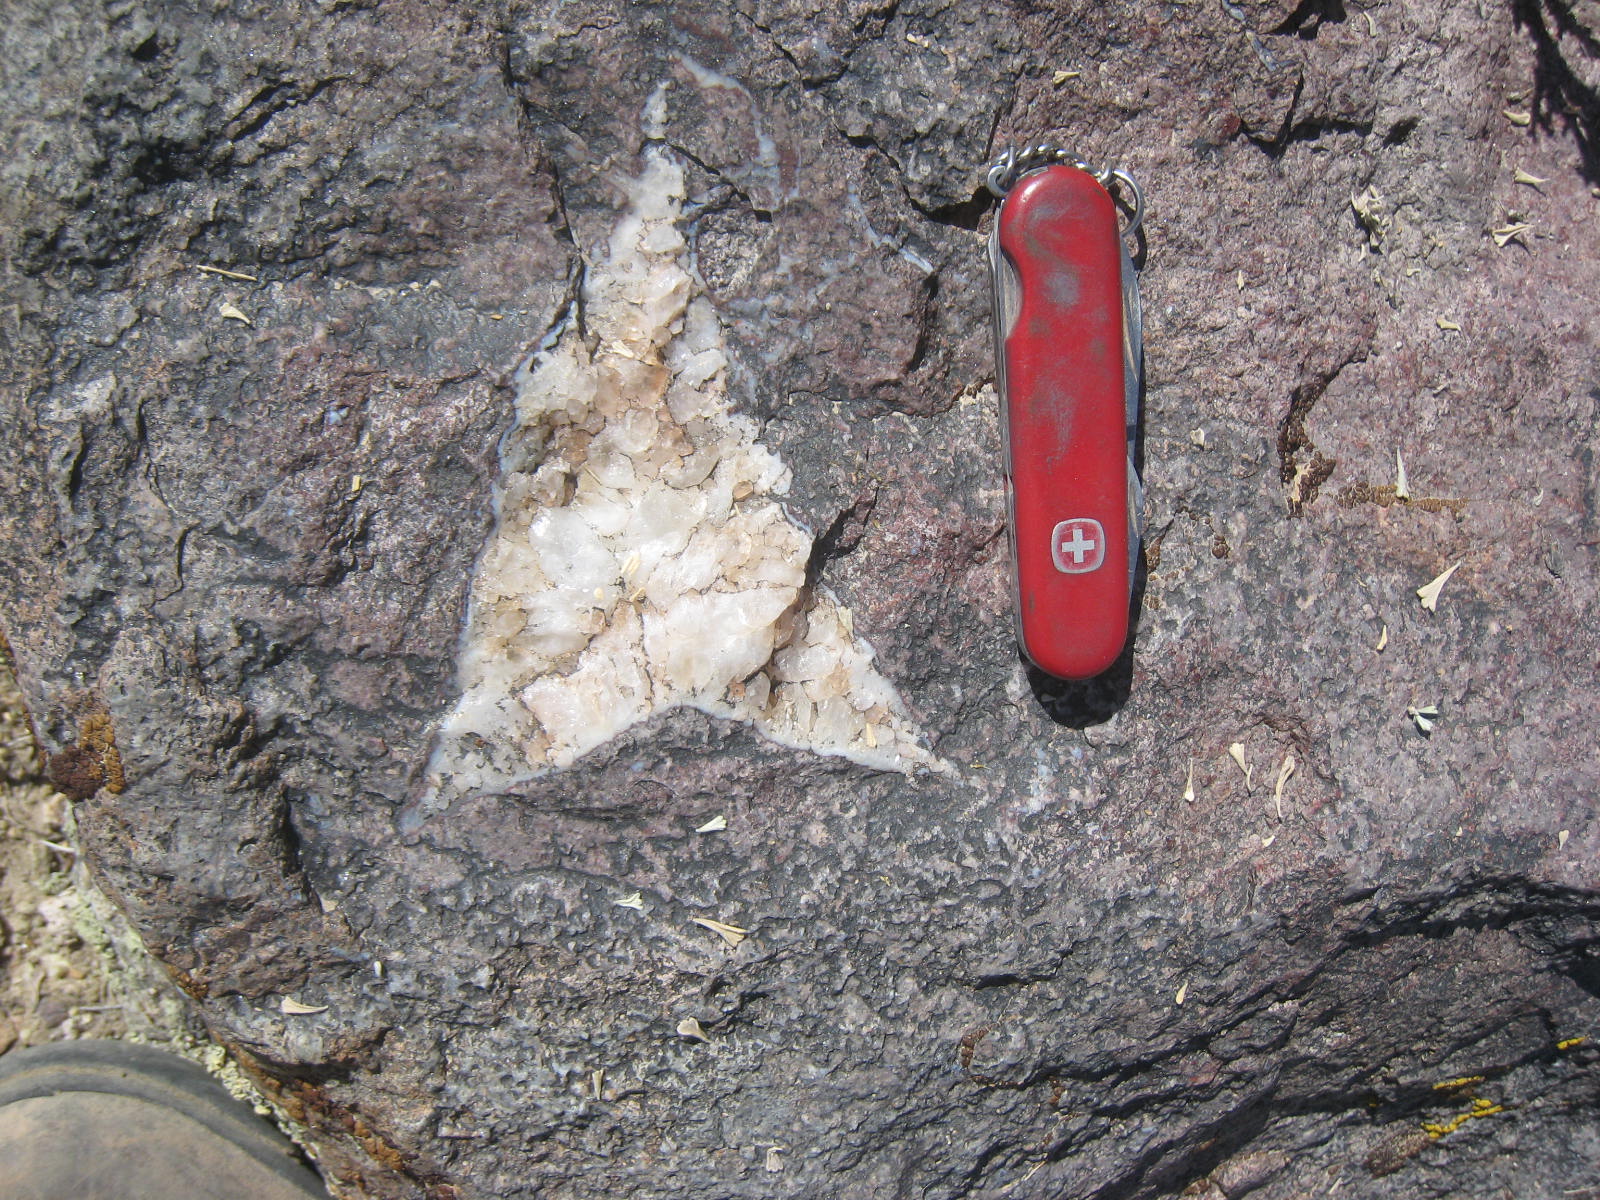 Star Trek rock found near Area 51, NV. ooooooo...